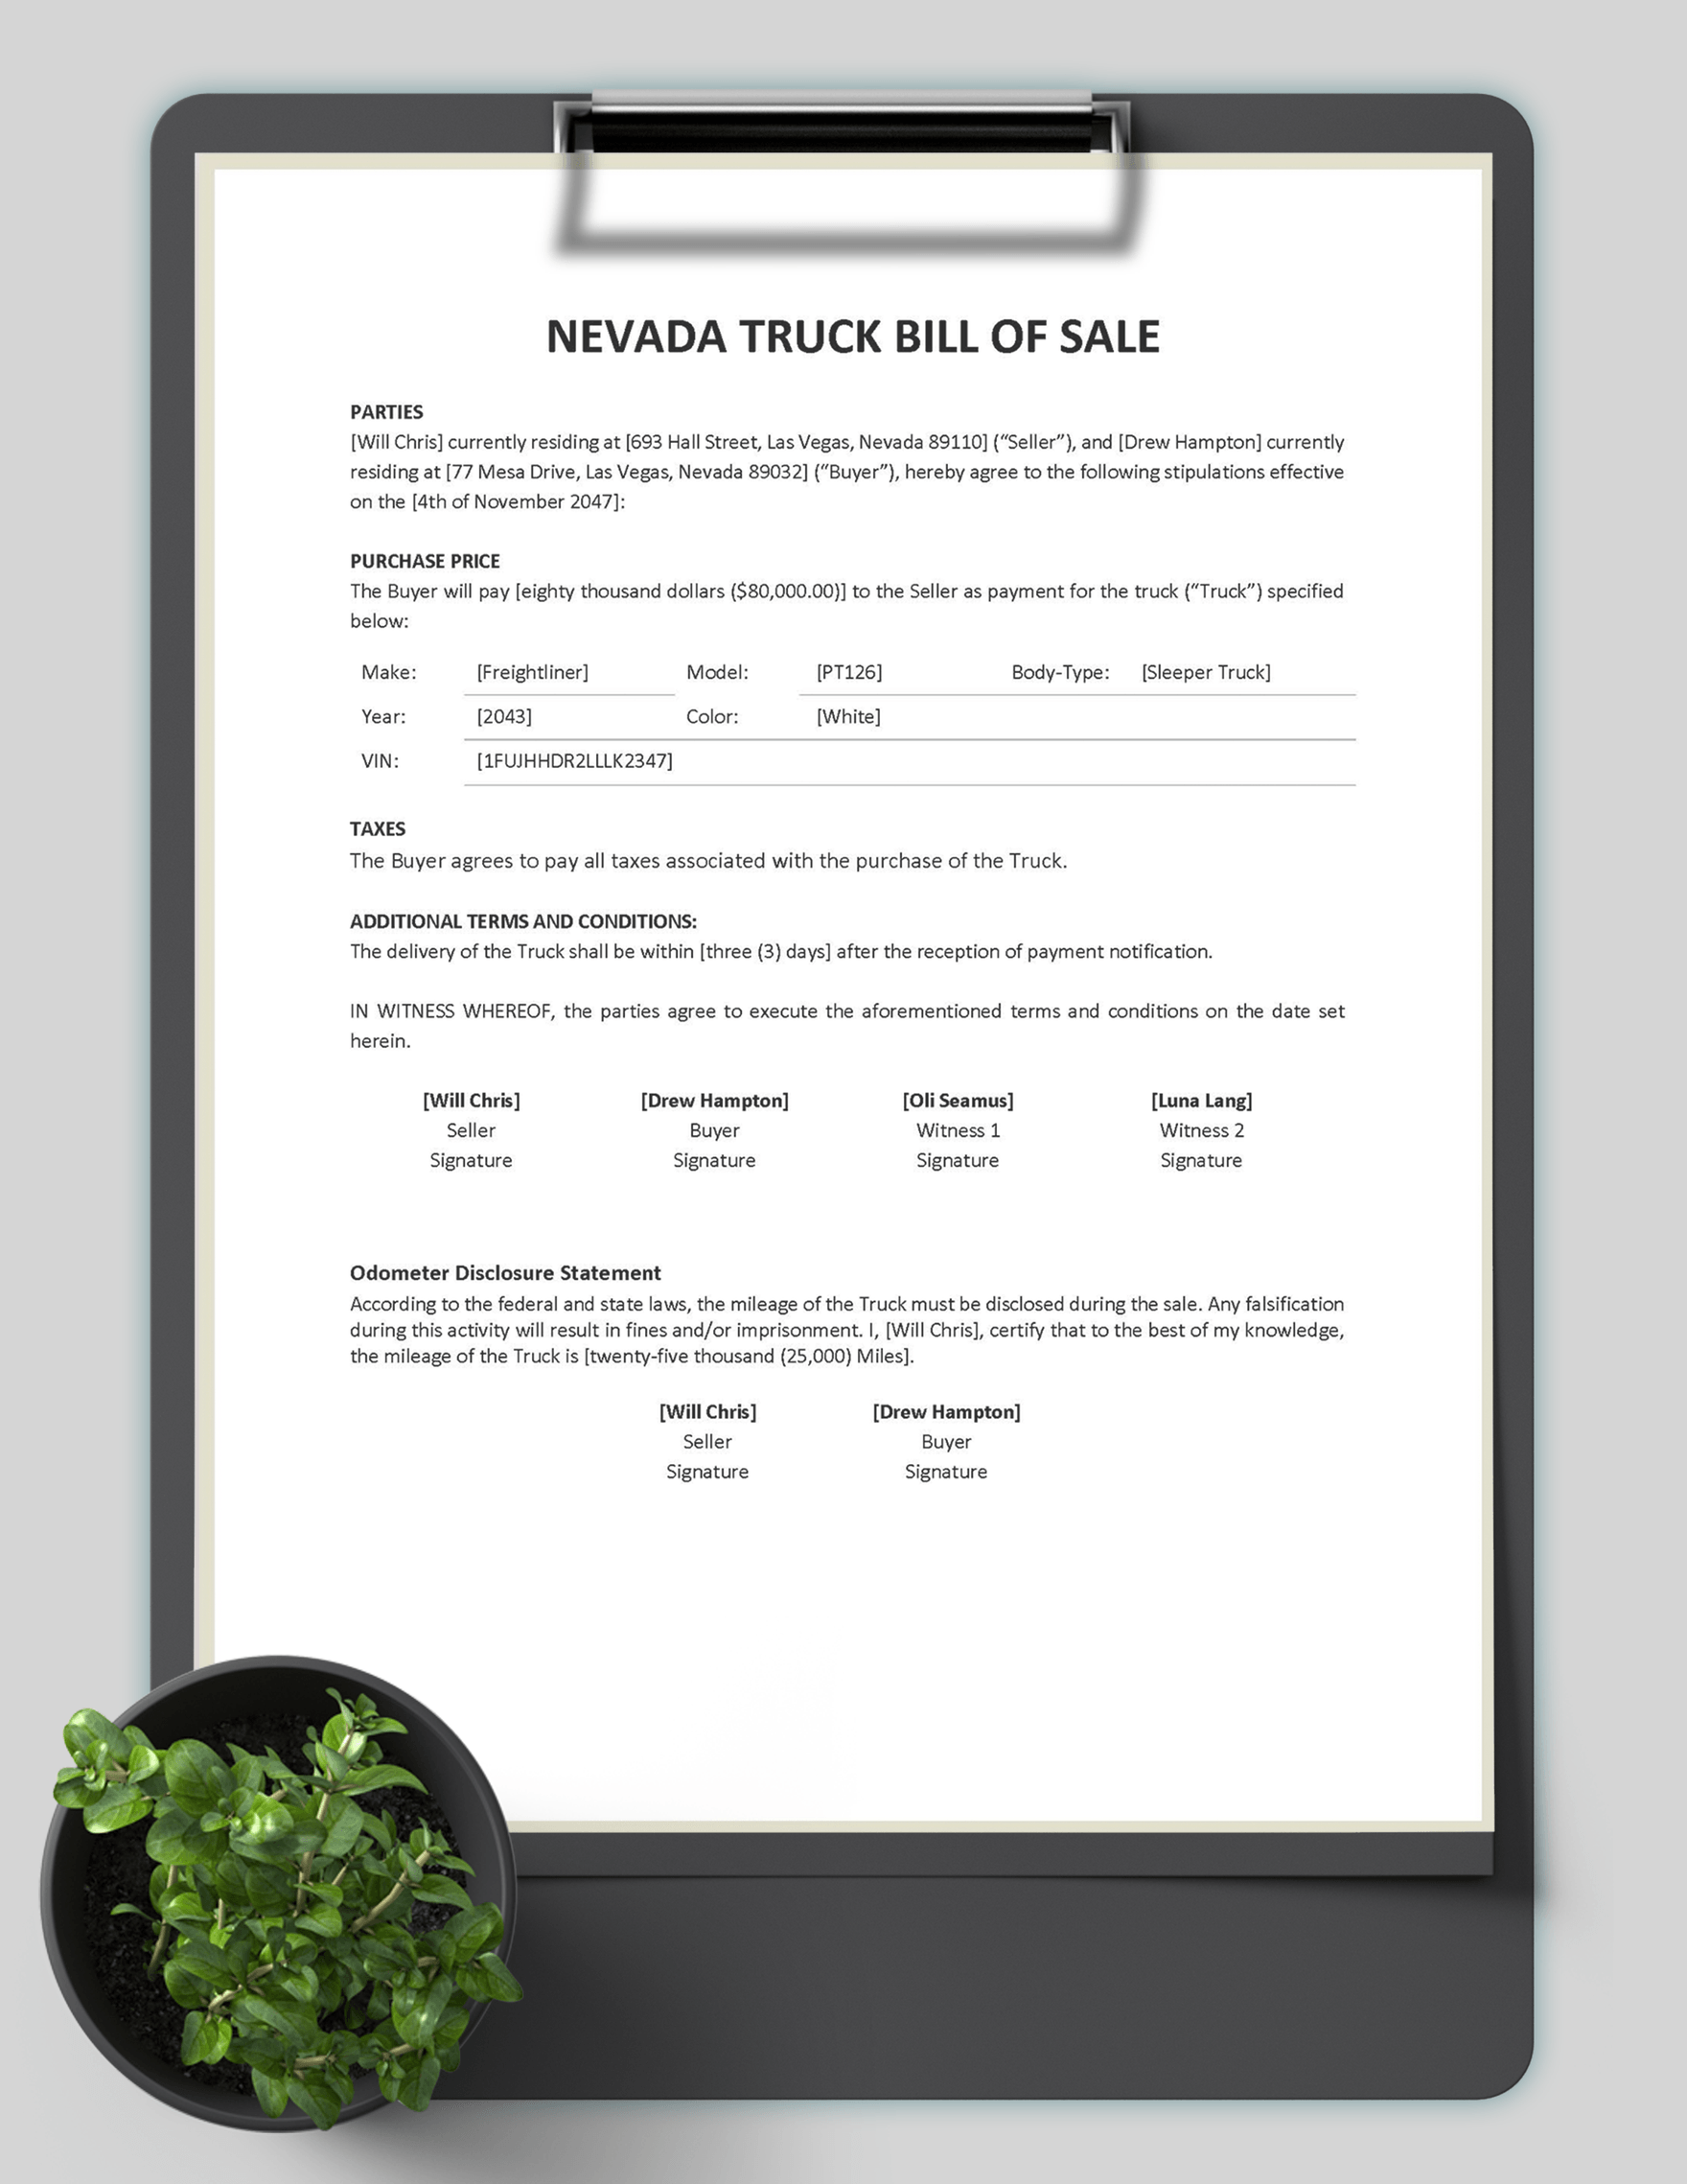 Nevada Truck Bill of Sale Template